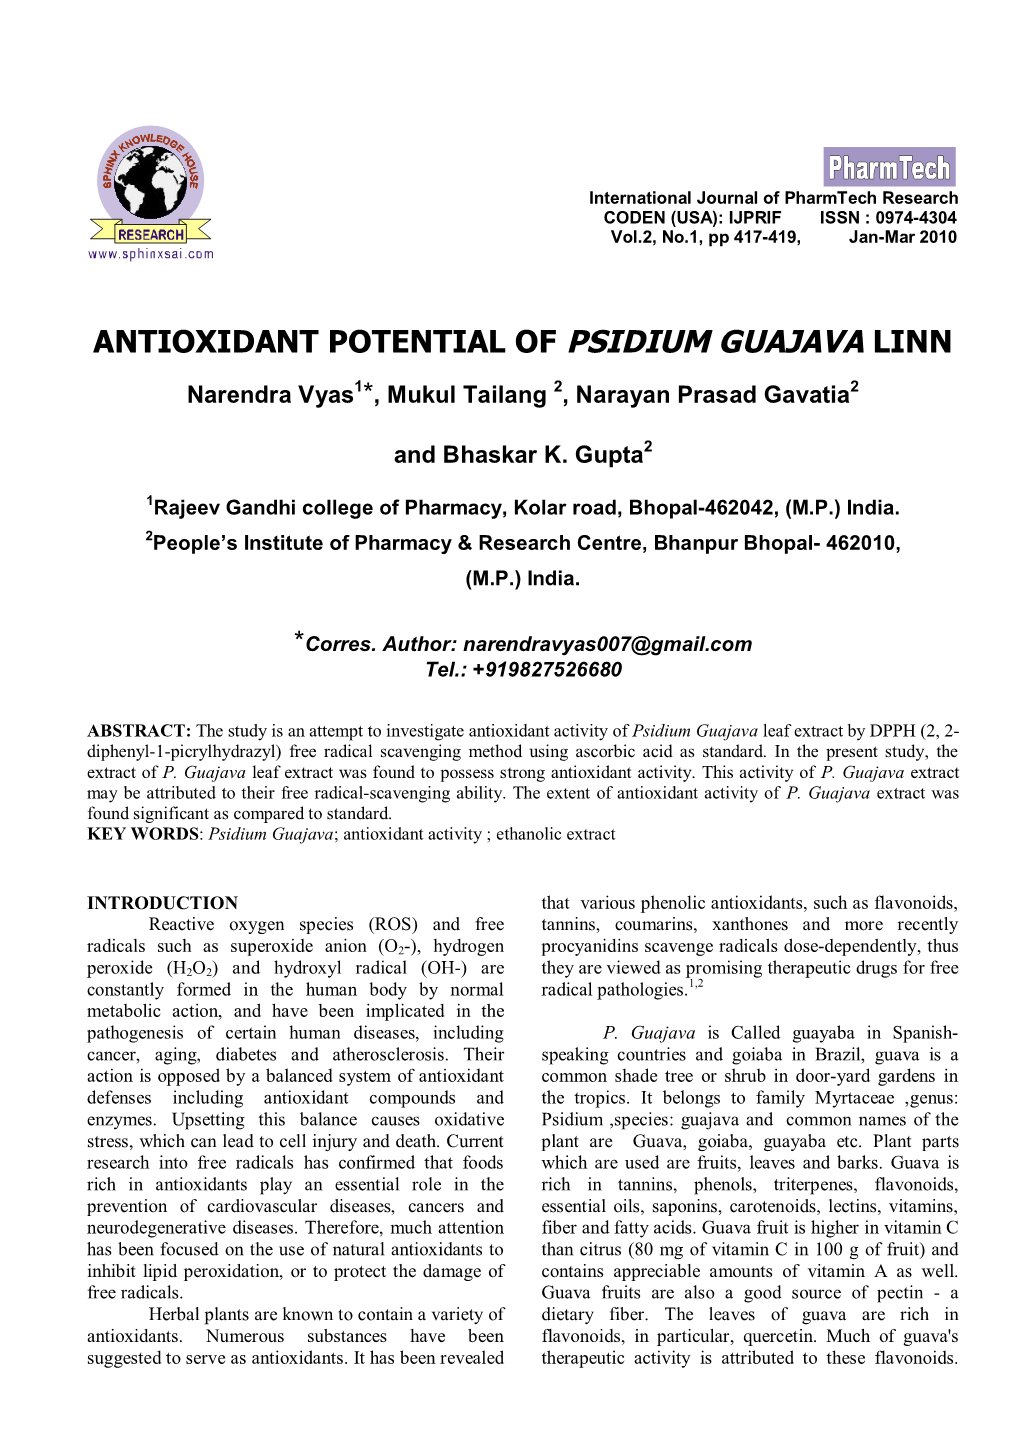 Antioxidant Potential of Psidium Guajava Linn